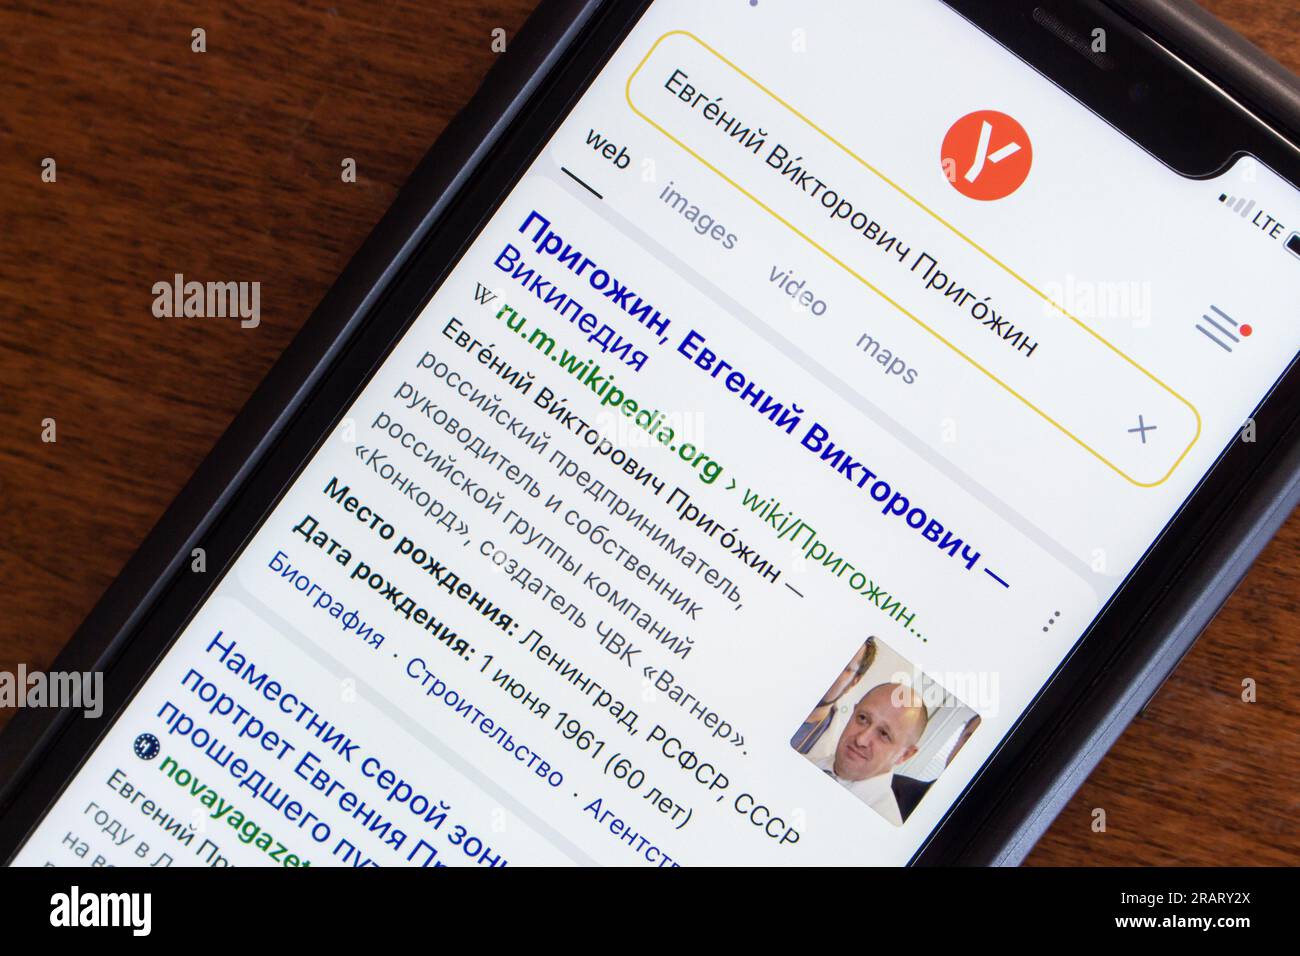 Search result of Yevgeny Prigozhin on Yandex website seen in an iPhone screen. Yevgeny Viktorovich Prigozhin is a Russian oligarch, mercenary leader Stock Photo